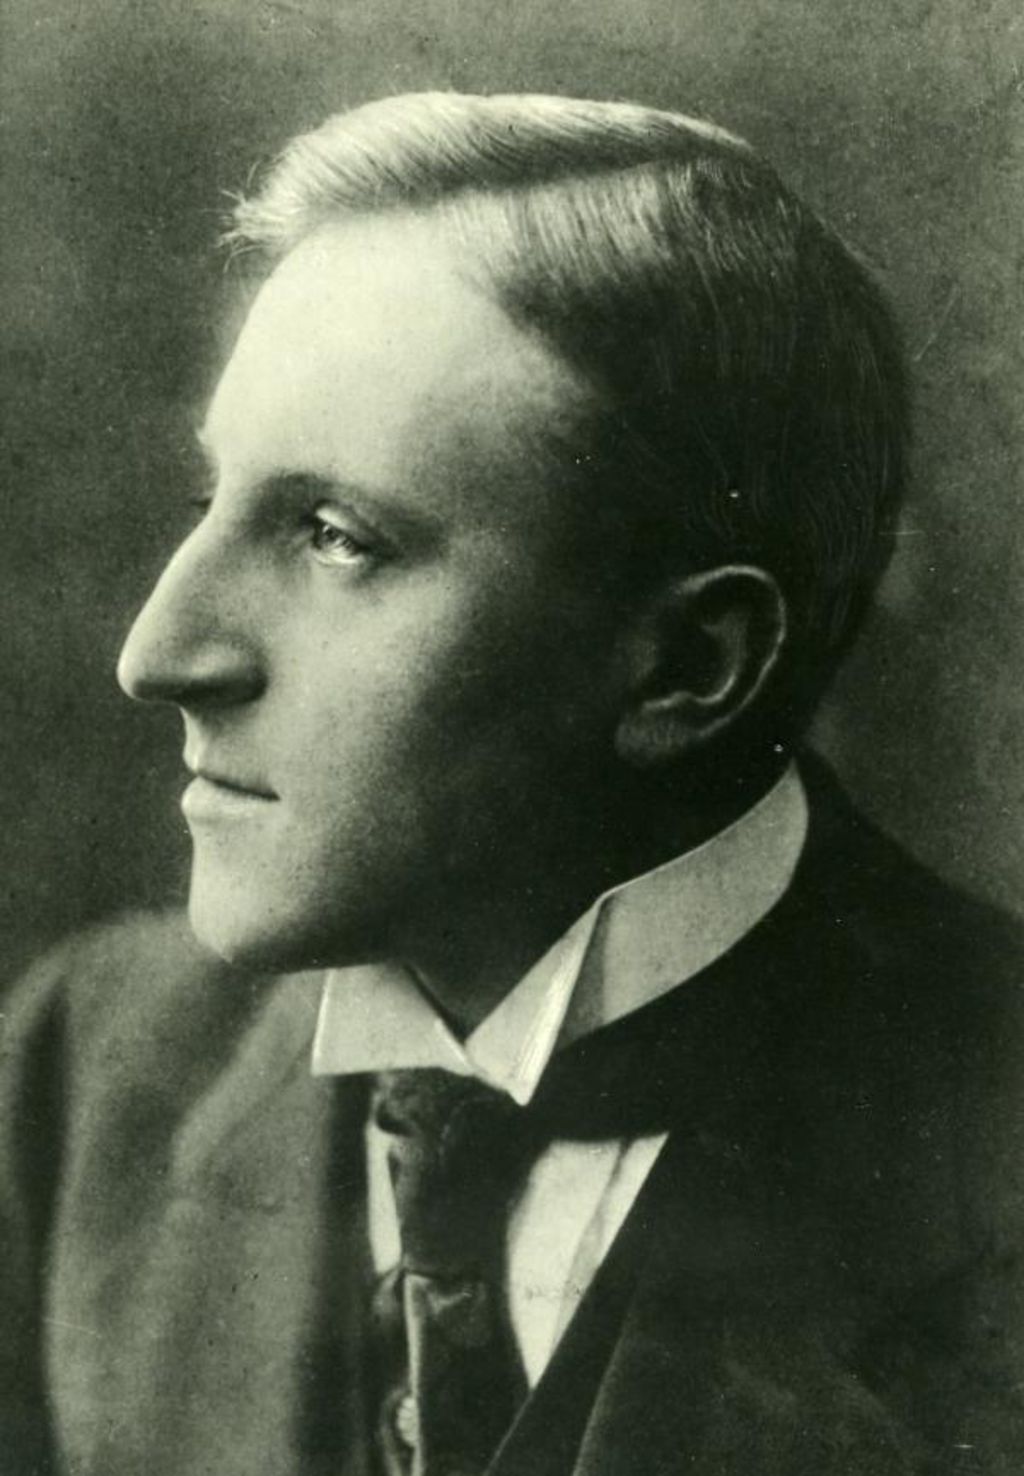 Exponat: Photo: Carl von Ossietzky, 1915